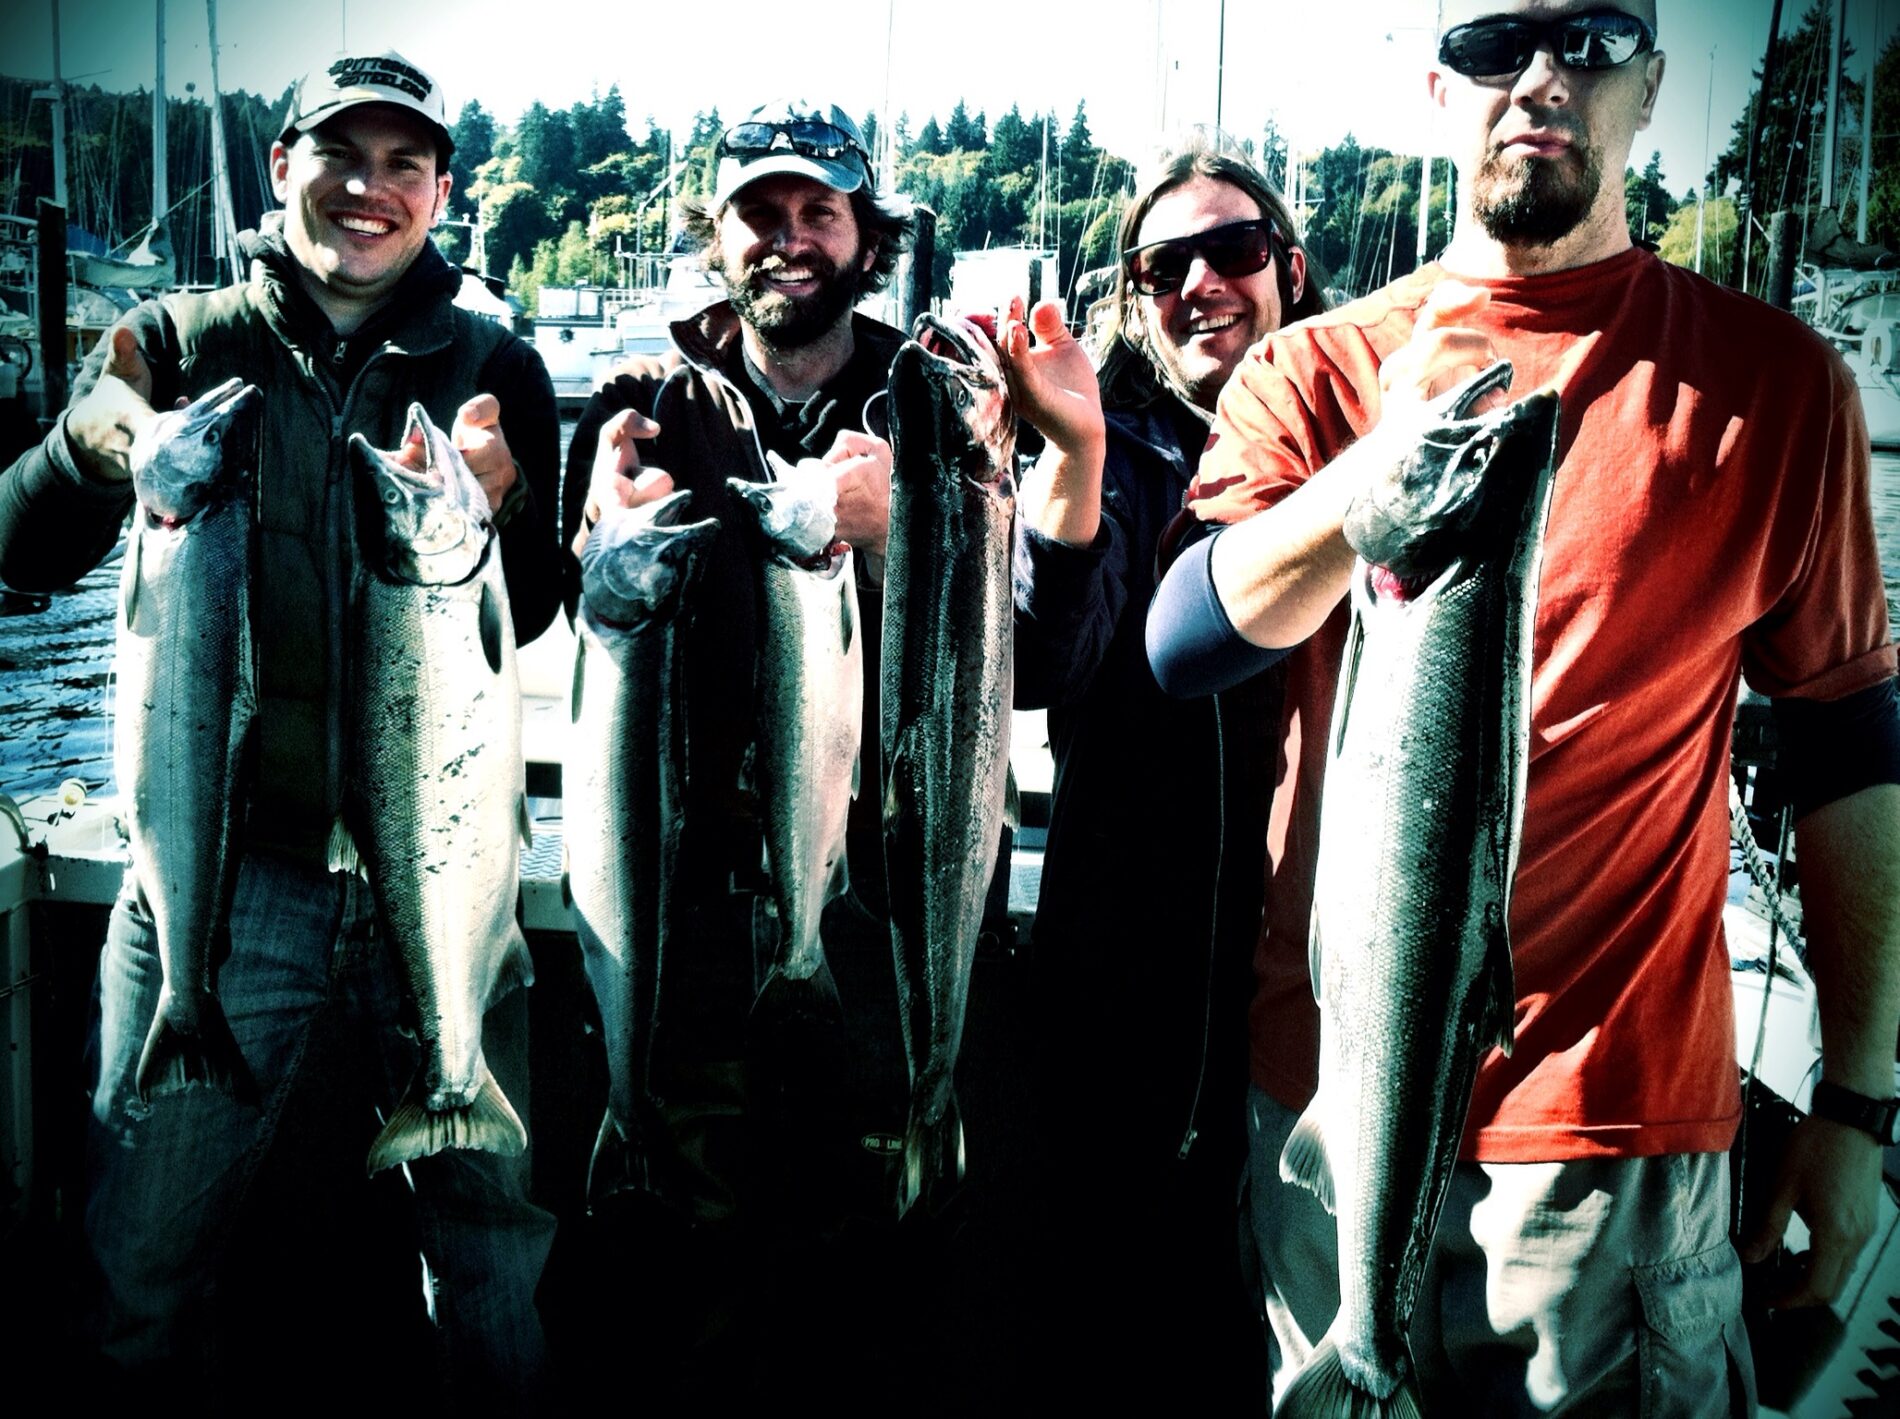 Coho Salmon  Cascade Fishing Adventures